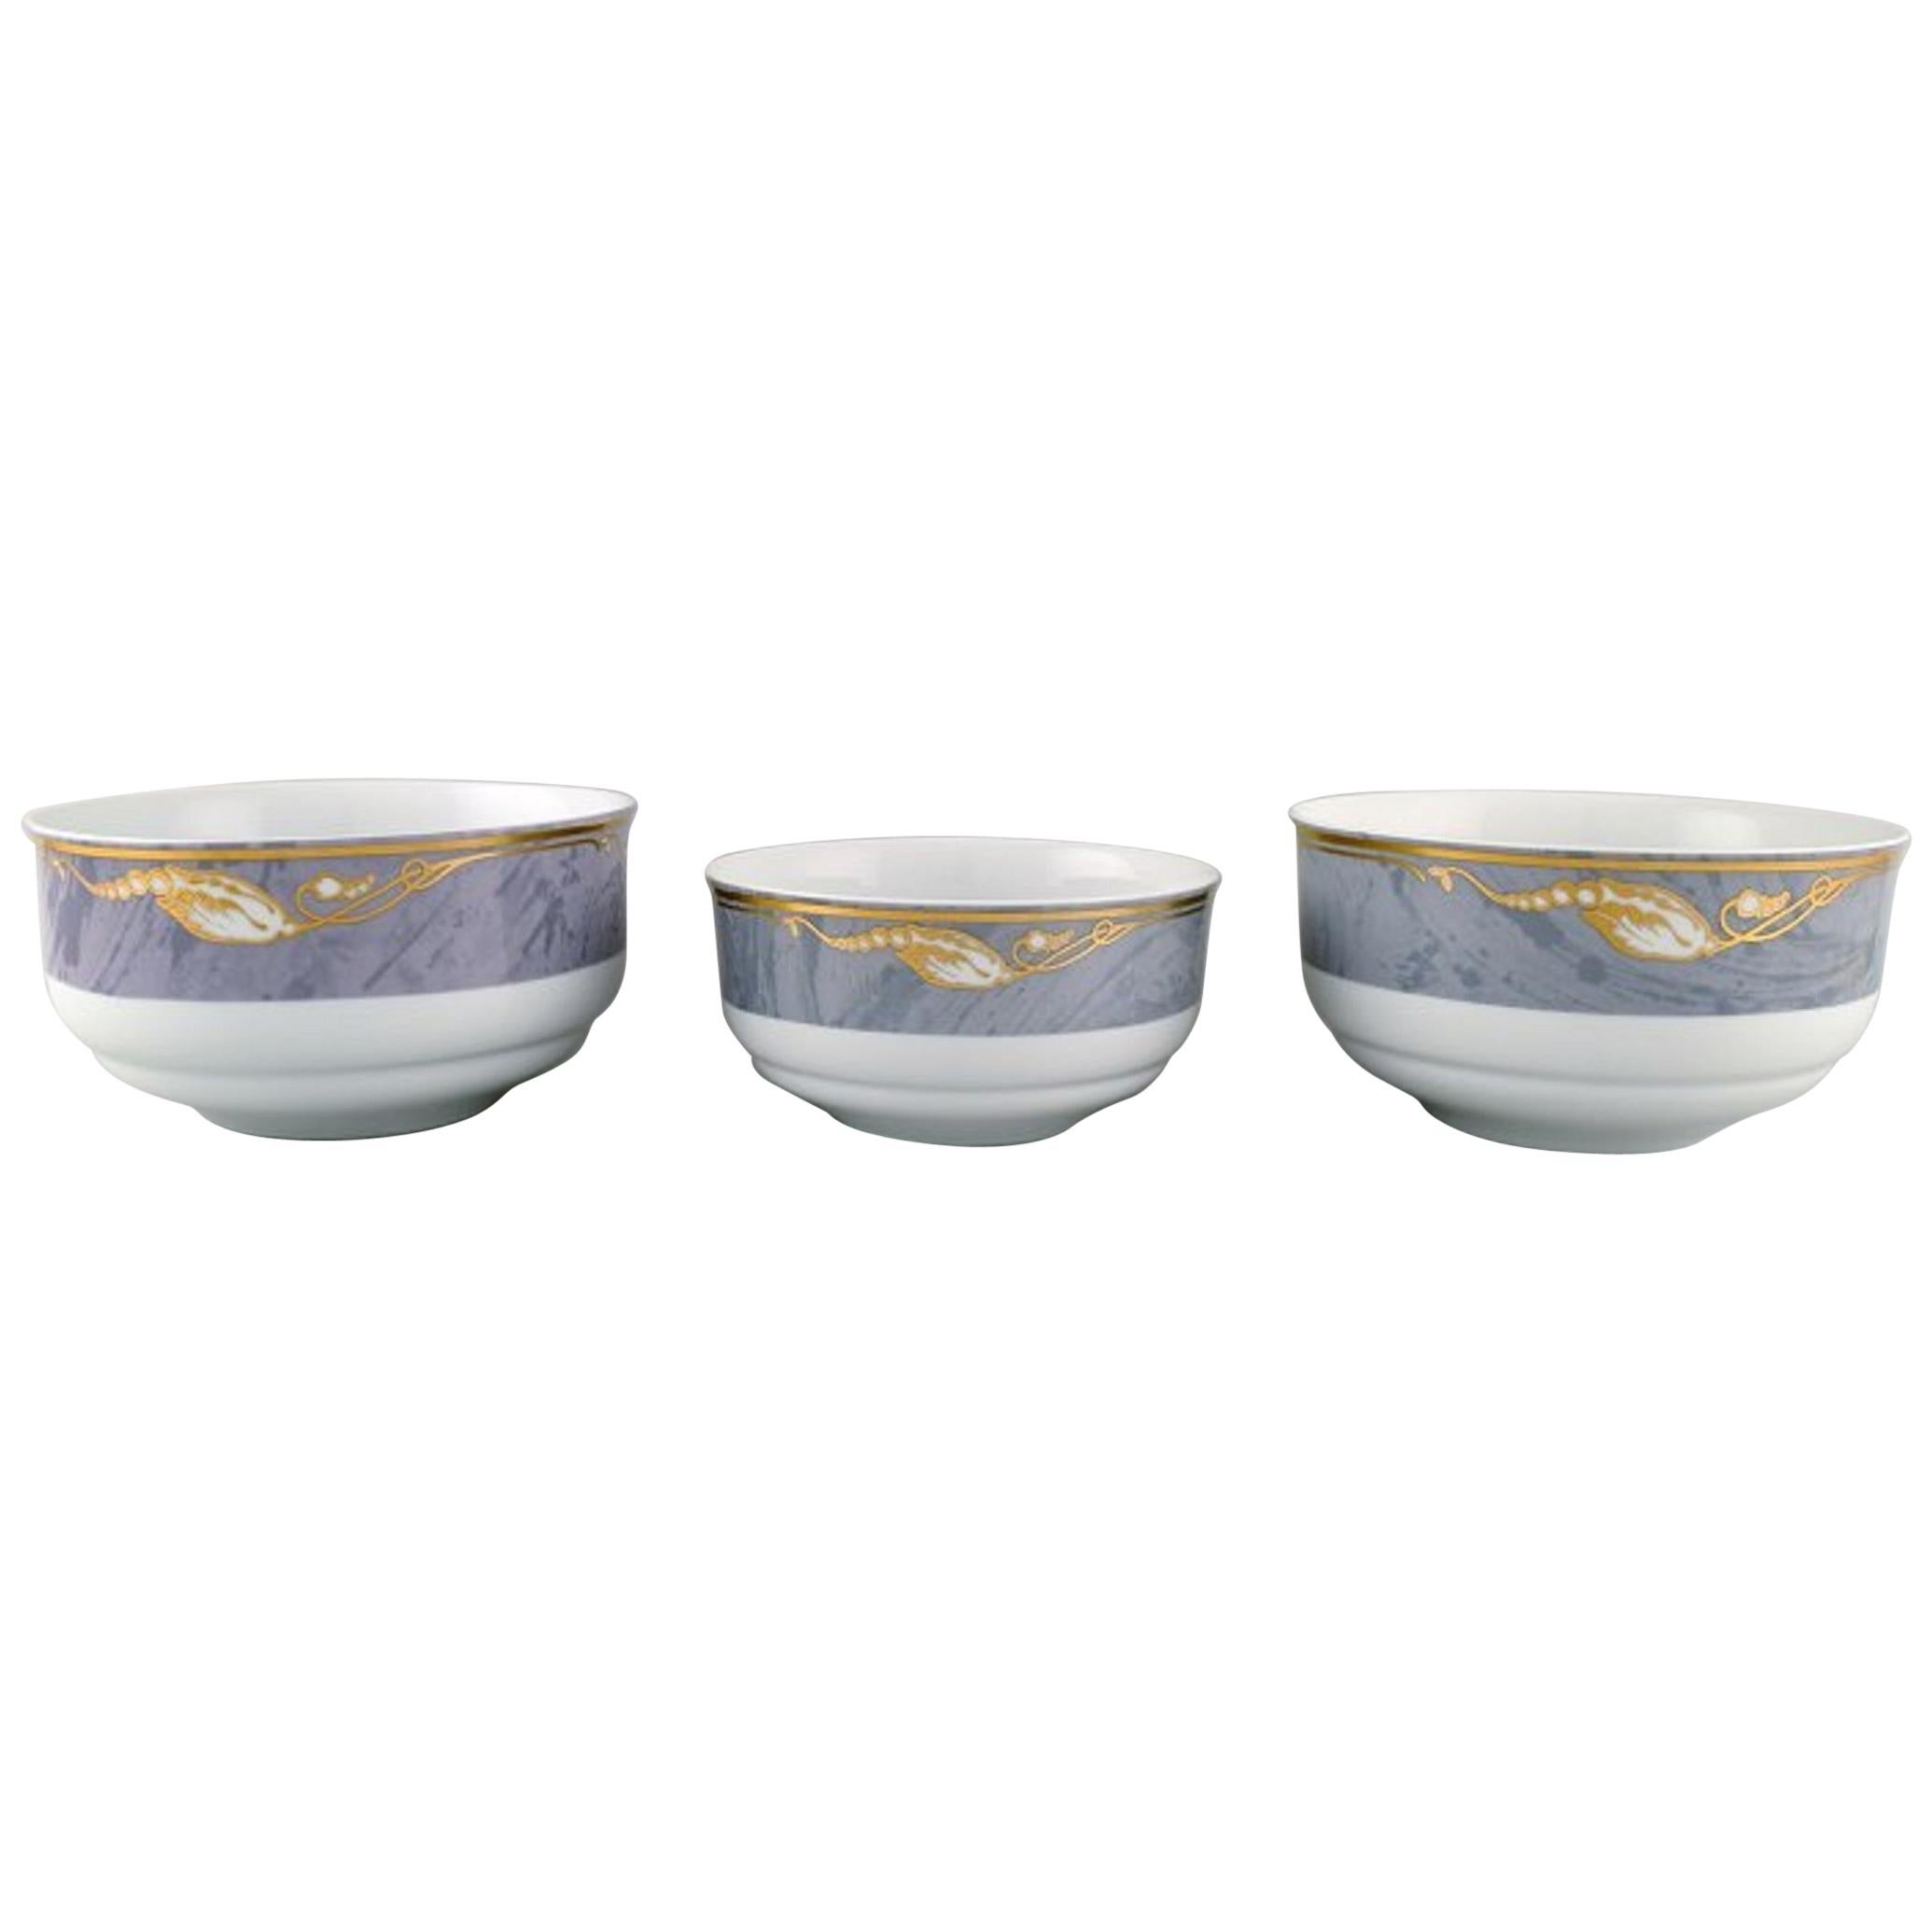 Three Royal Copenhagen Gray Magnolia Salad Bowls in Porcelain, Late 20th Century